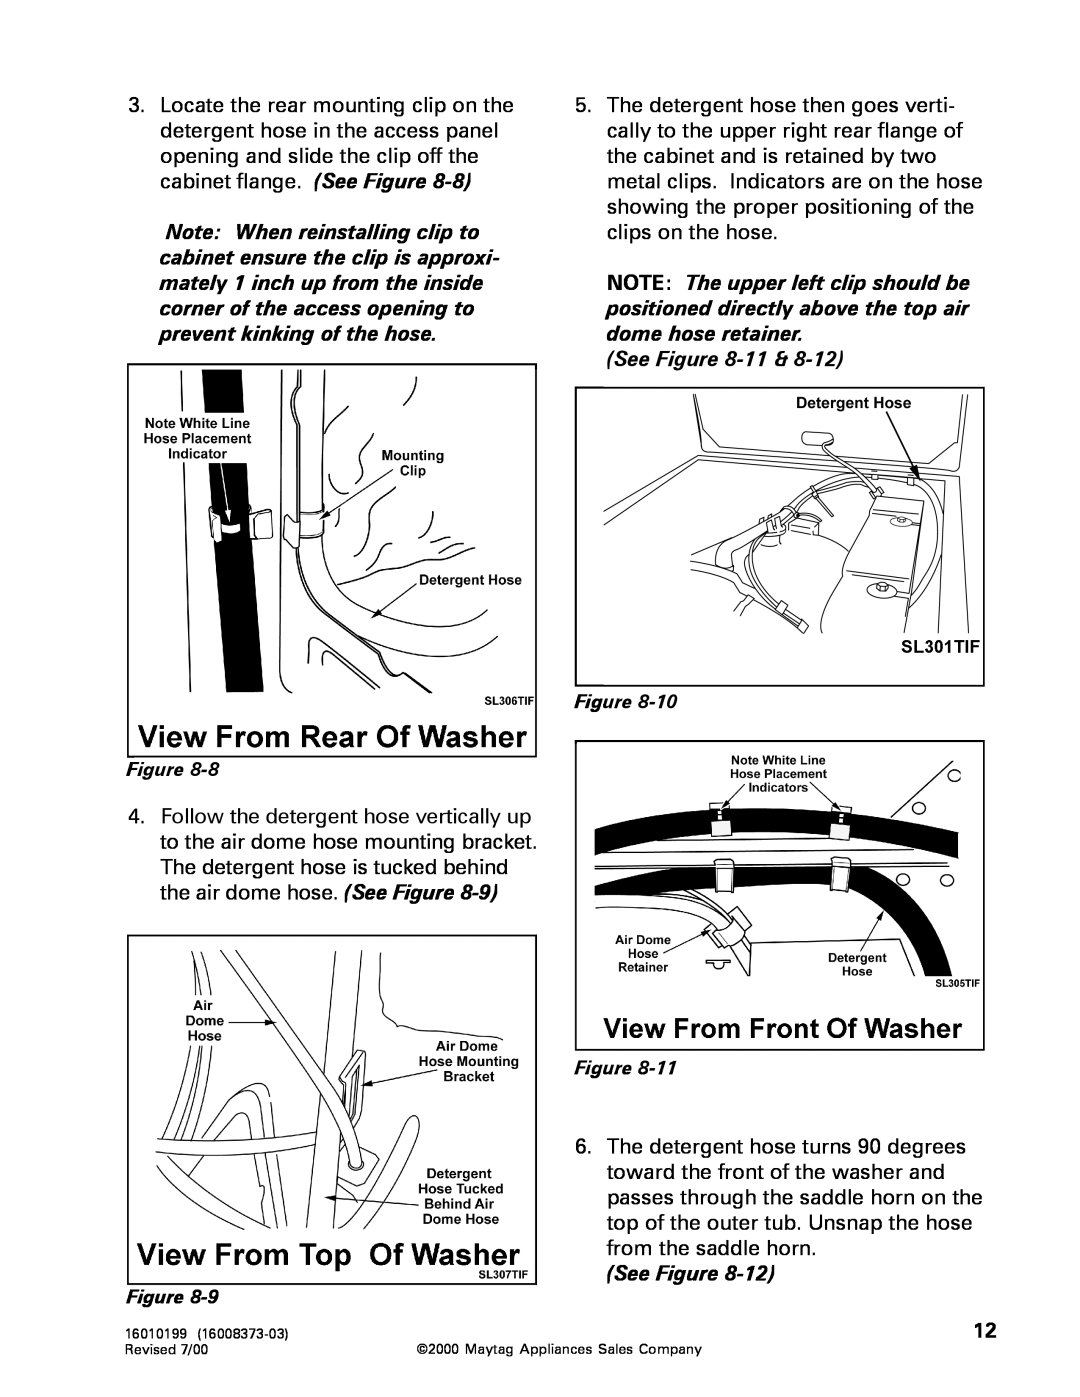 Whirlpool MAH3000 service manual See -11, See Figure 